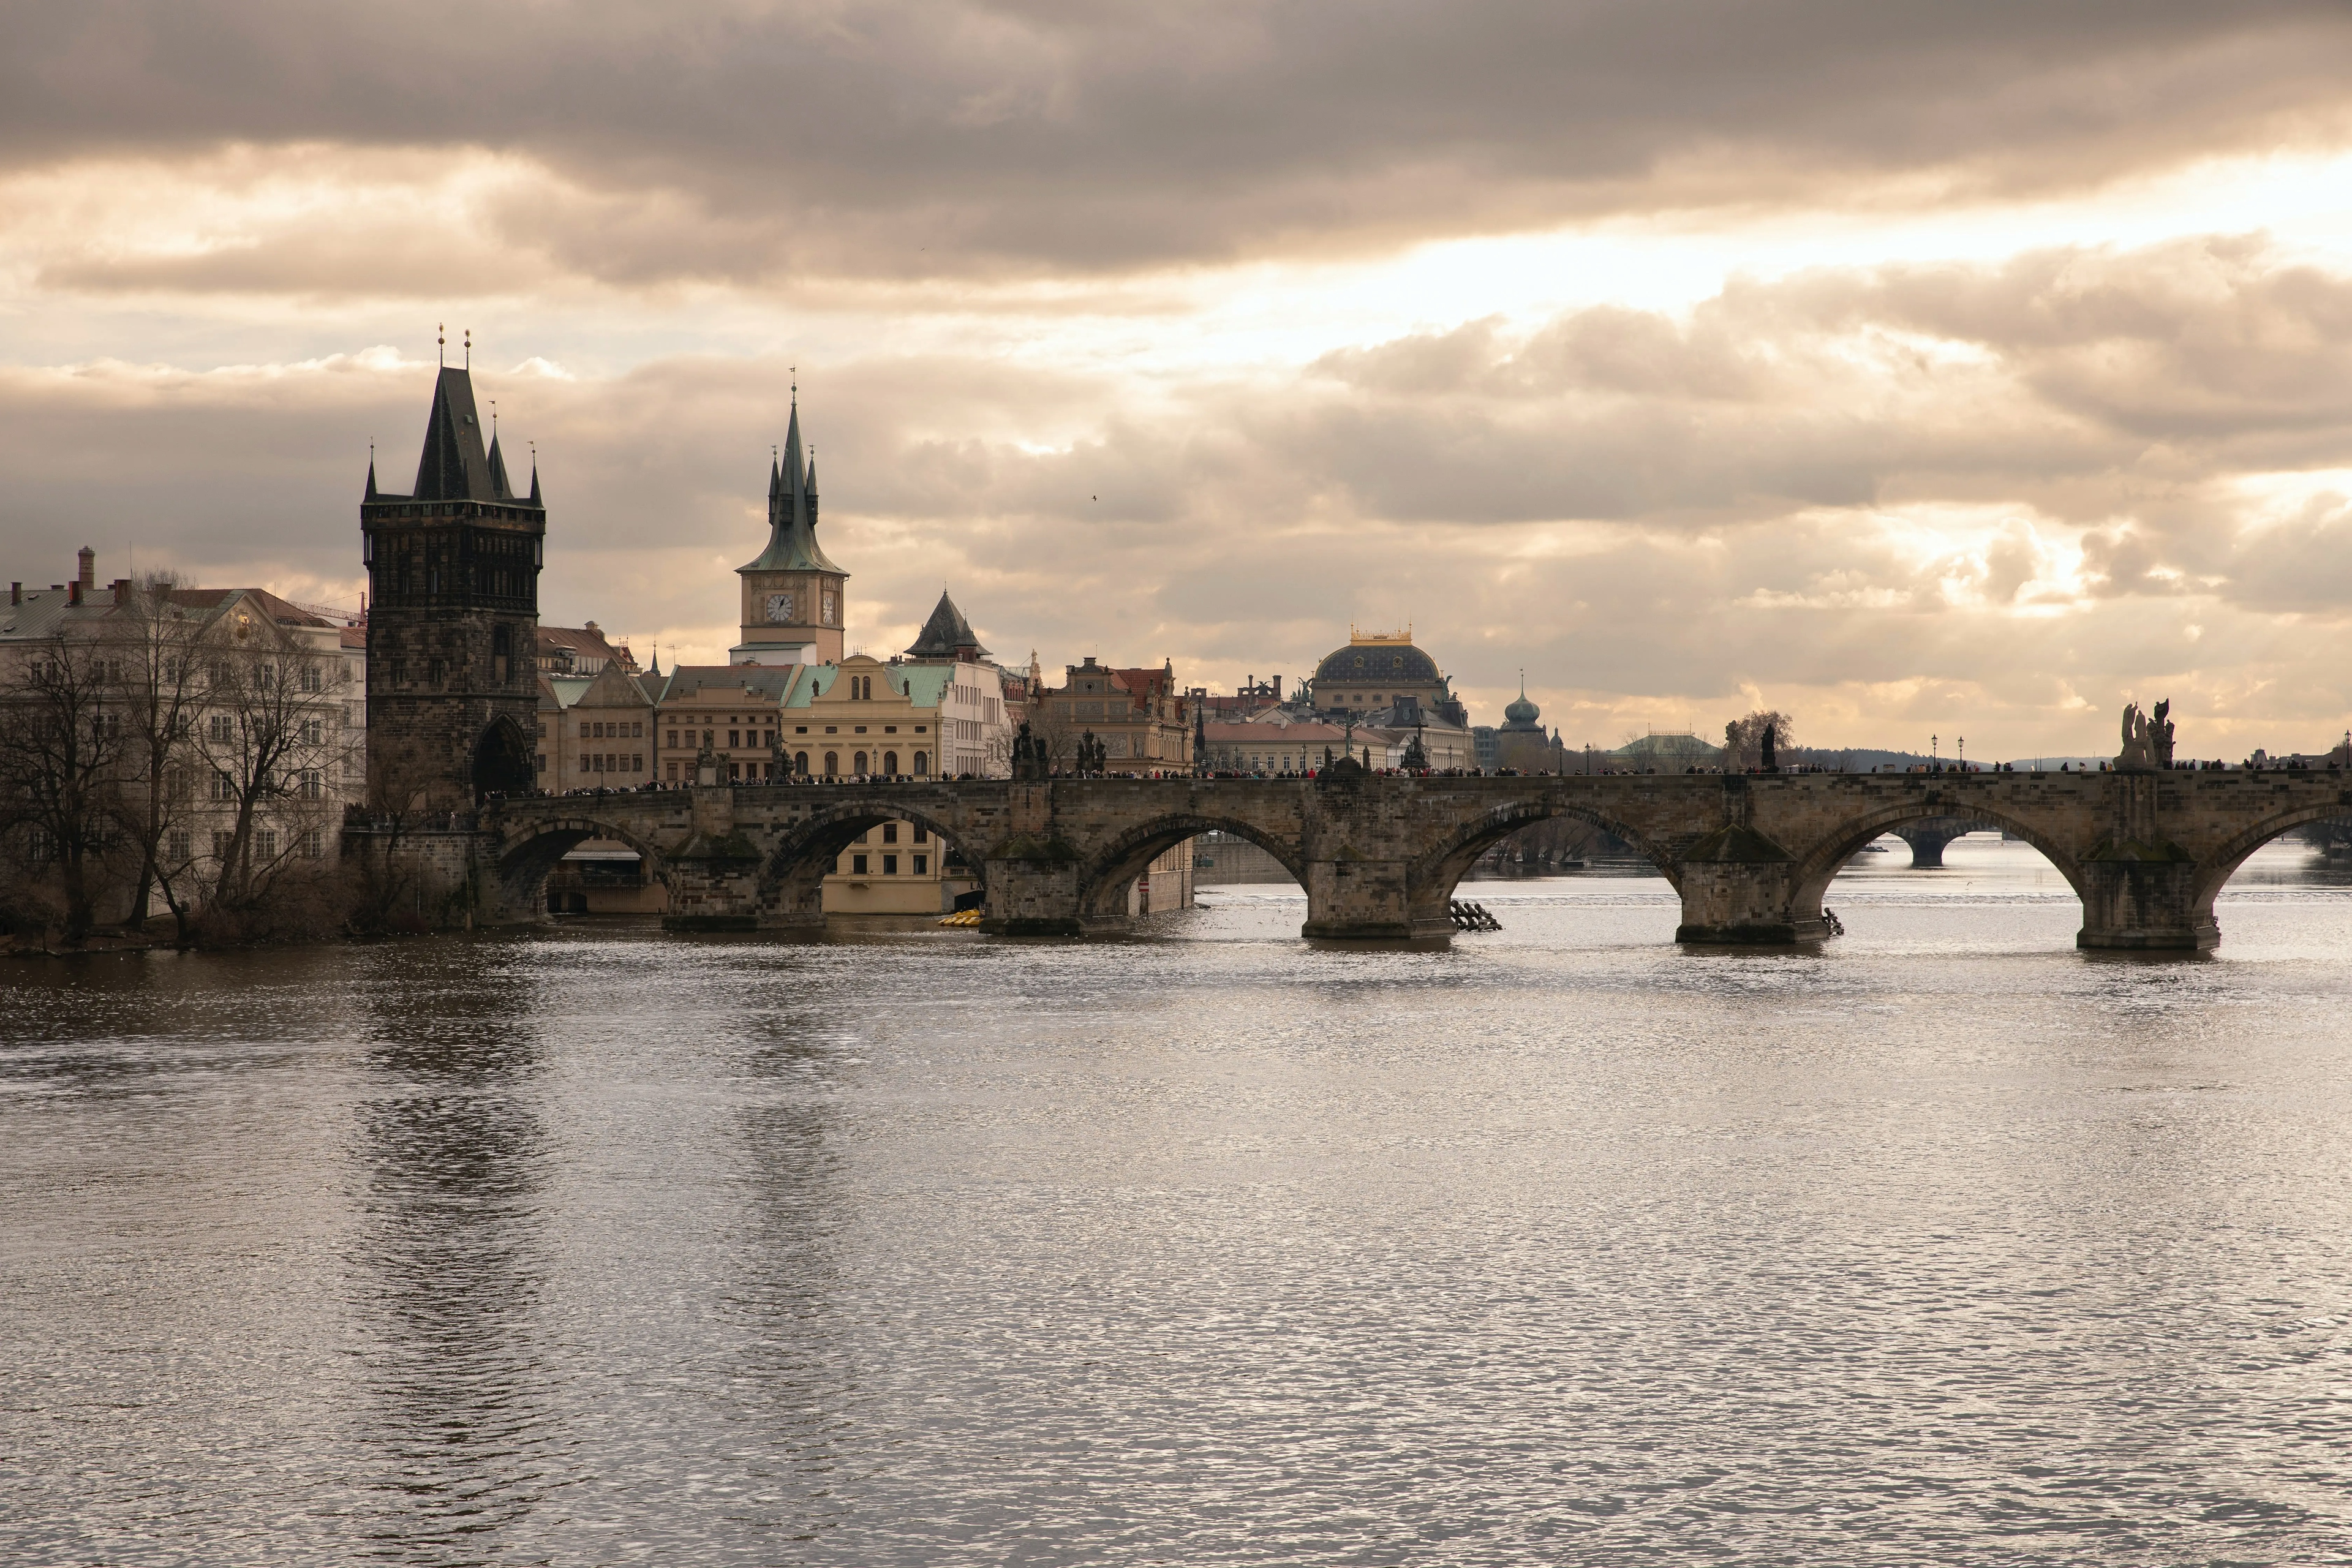 A Traveler's Guide To Charles Bridge In Prague